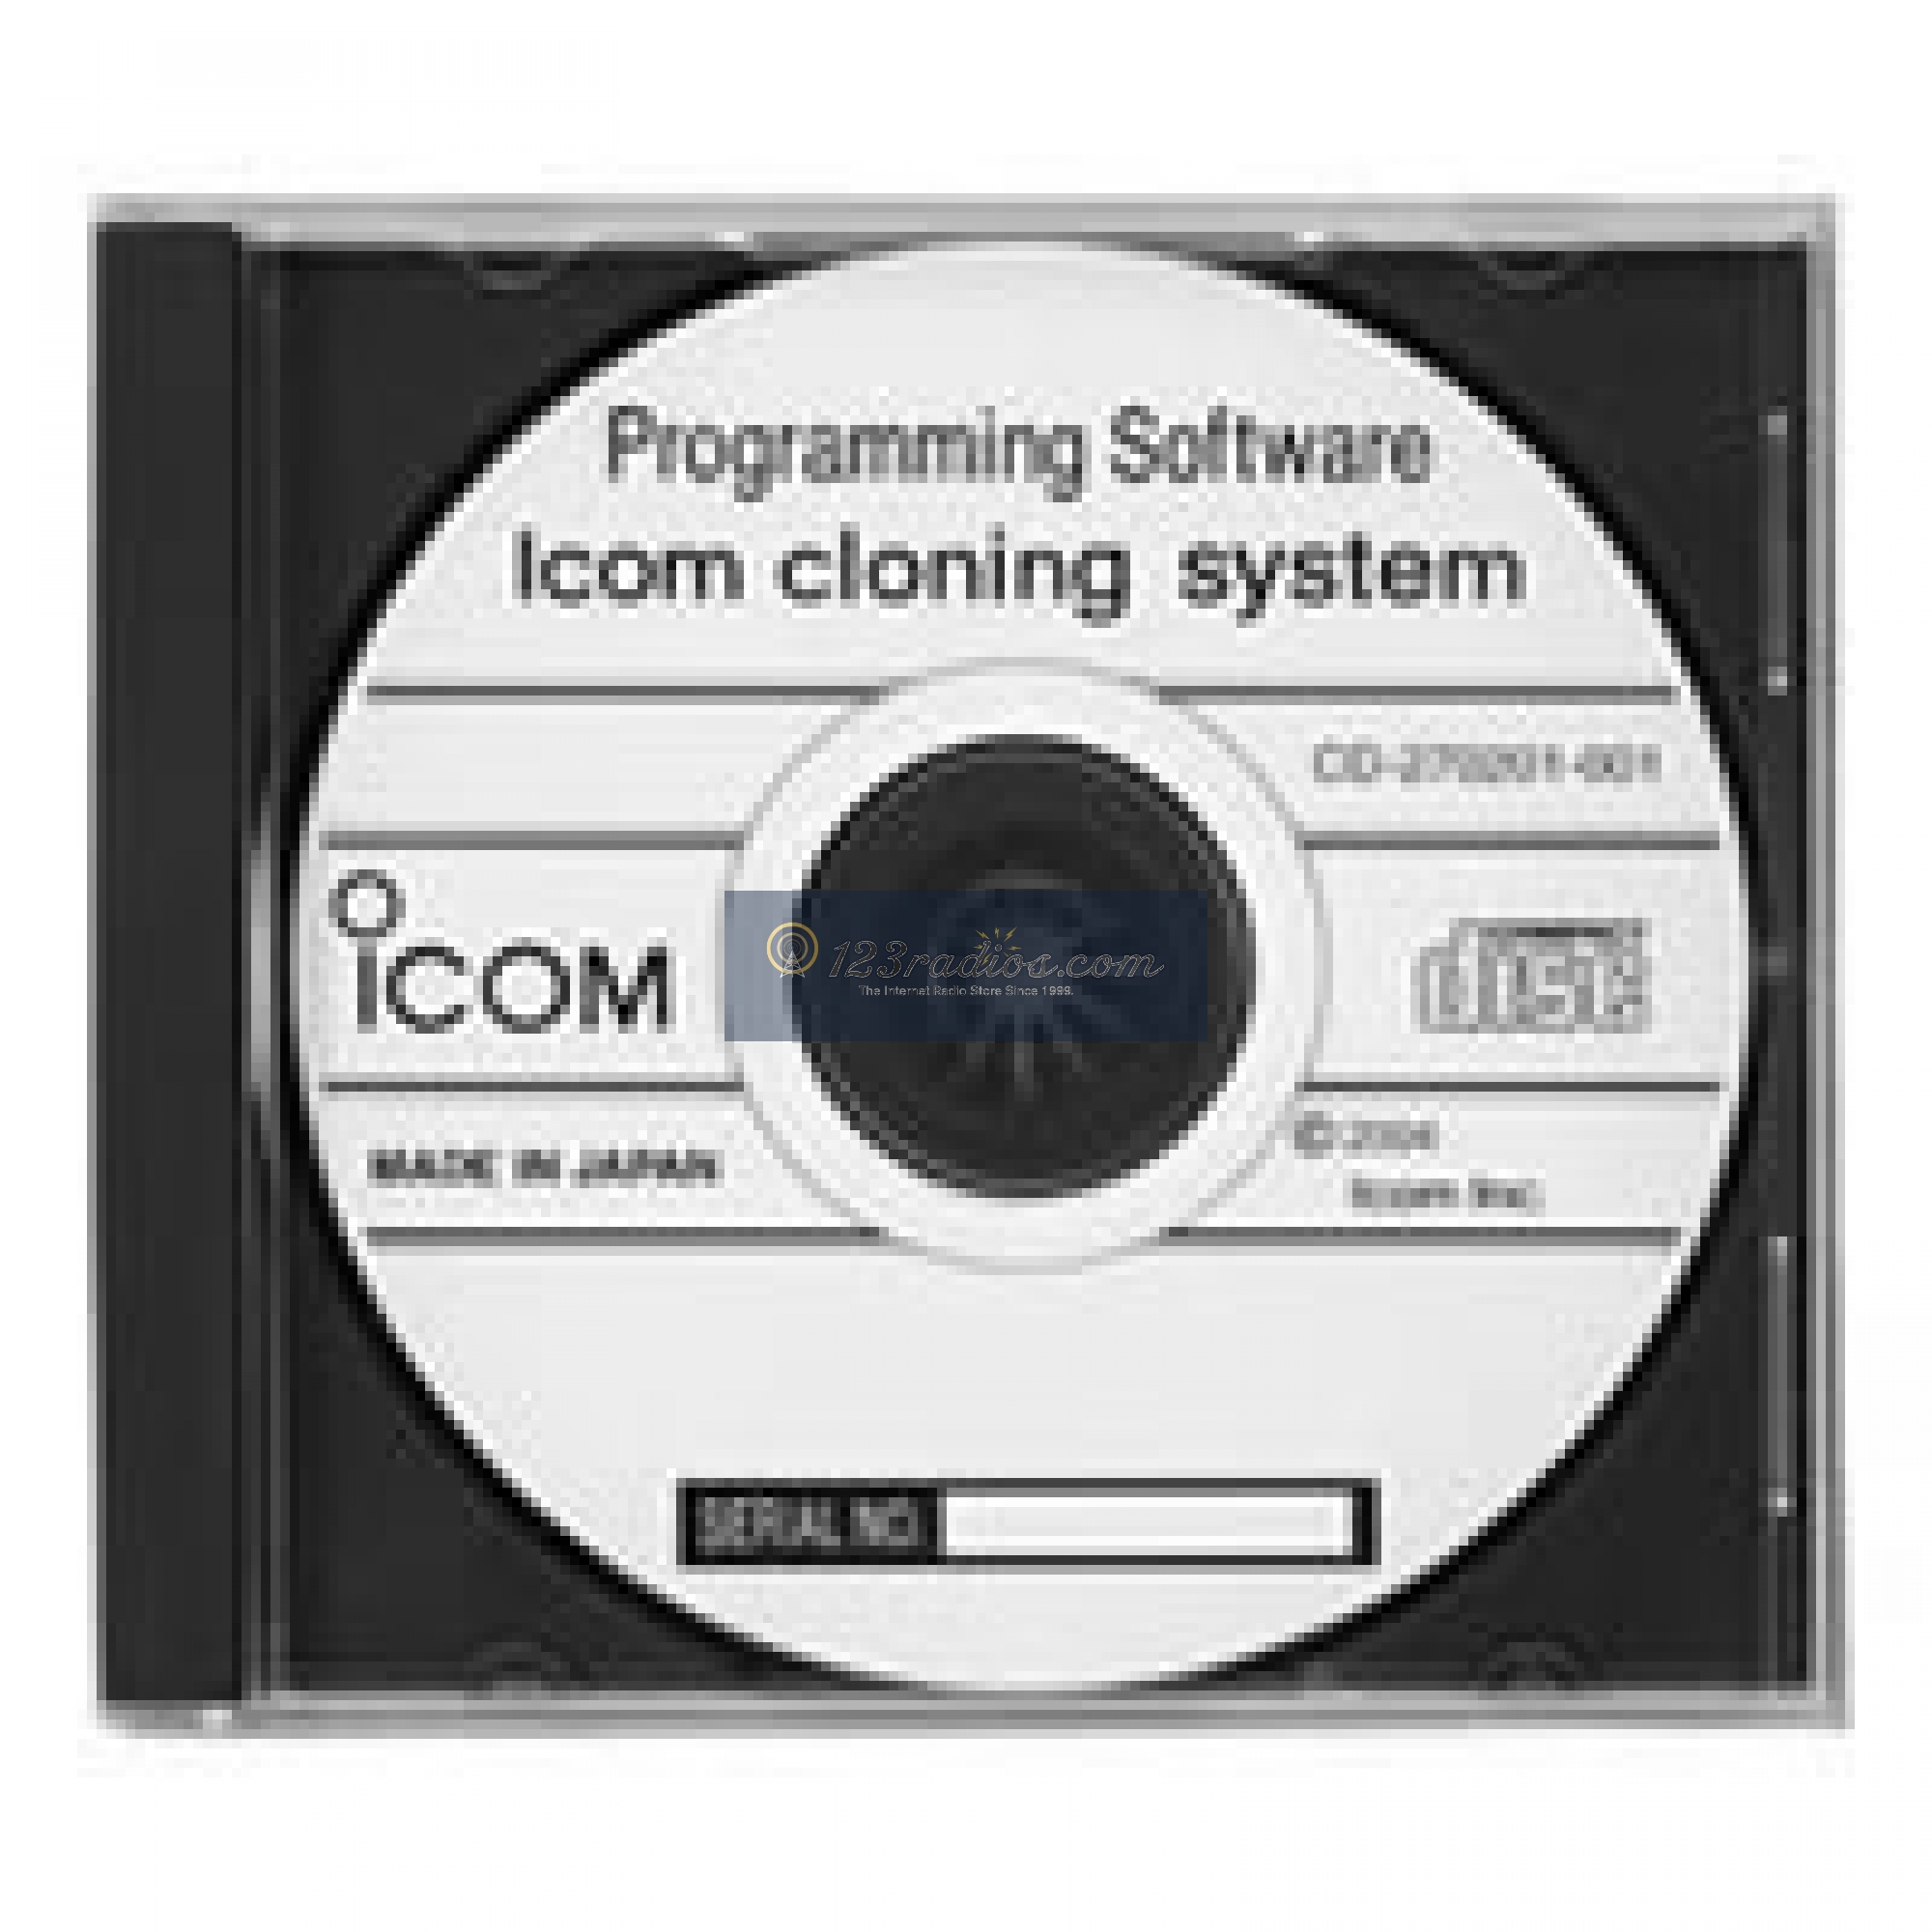 Programming software applications